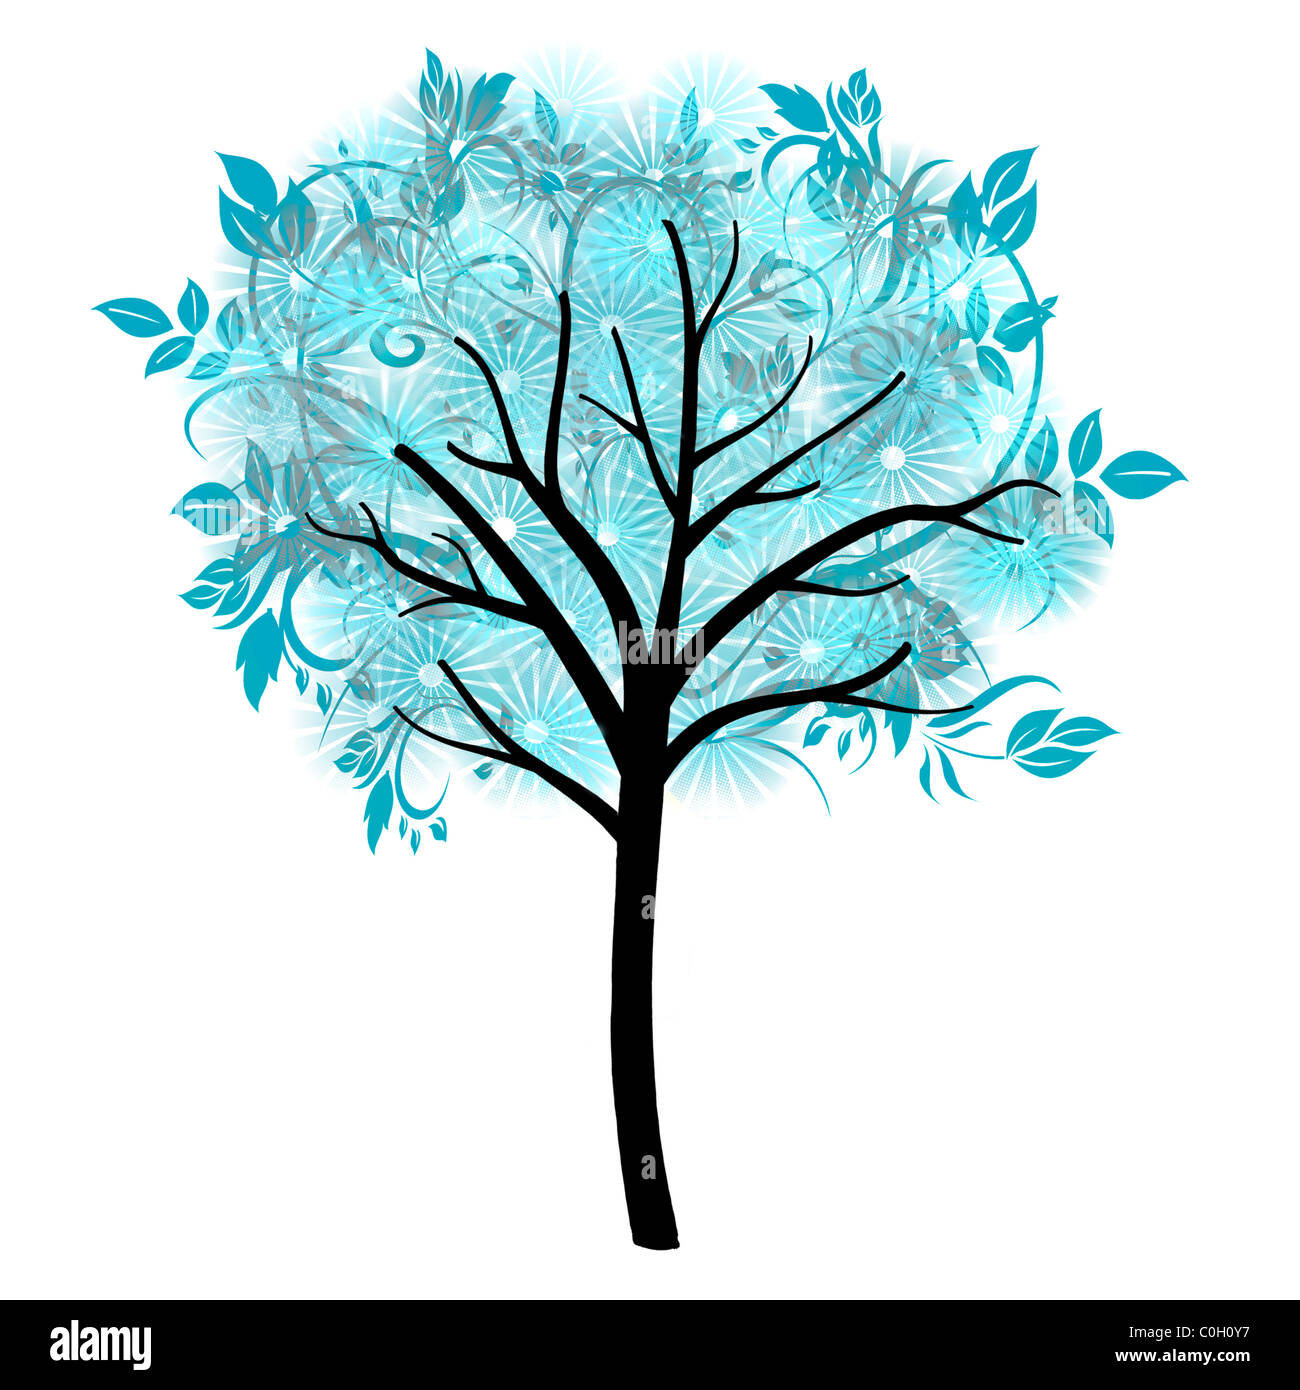 blue tree illustration Stock Photo